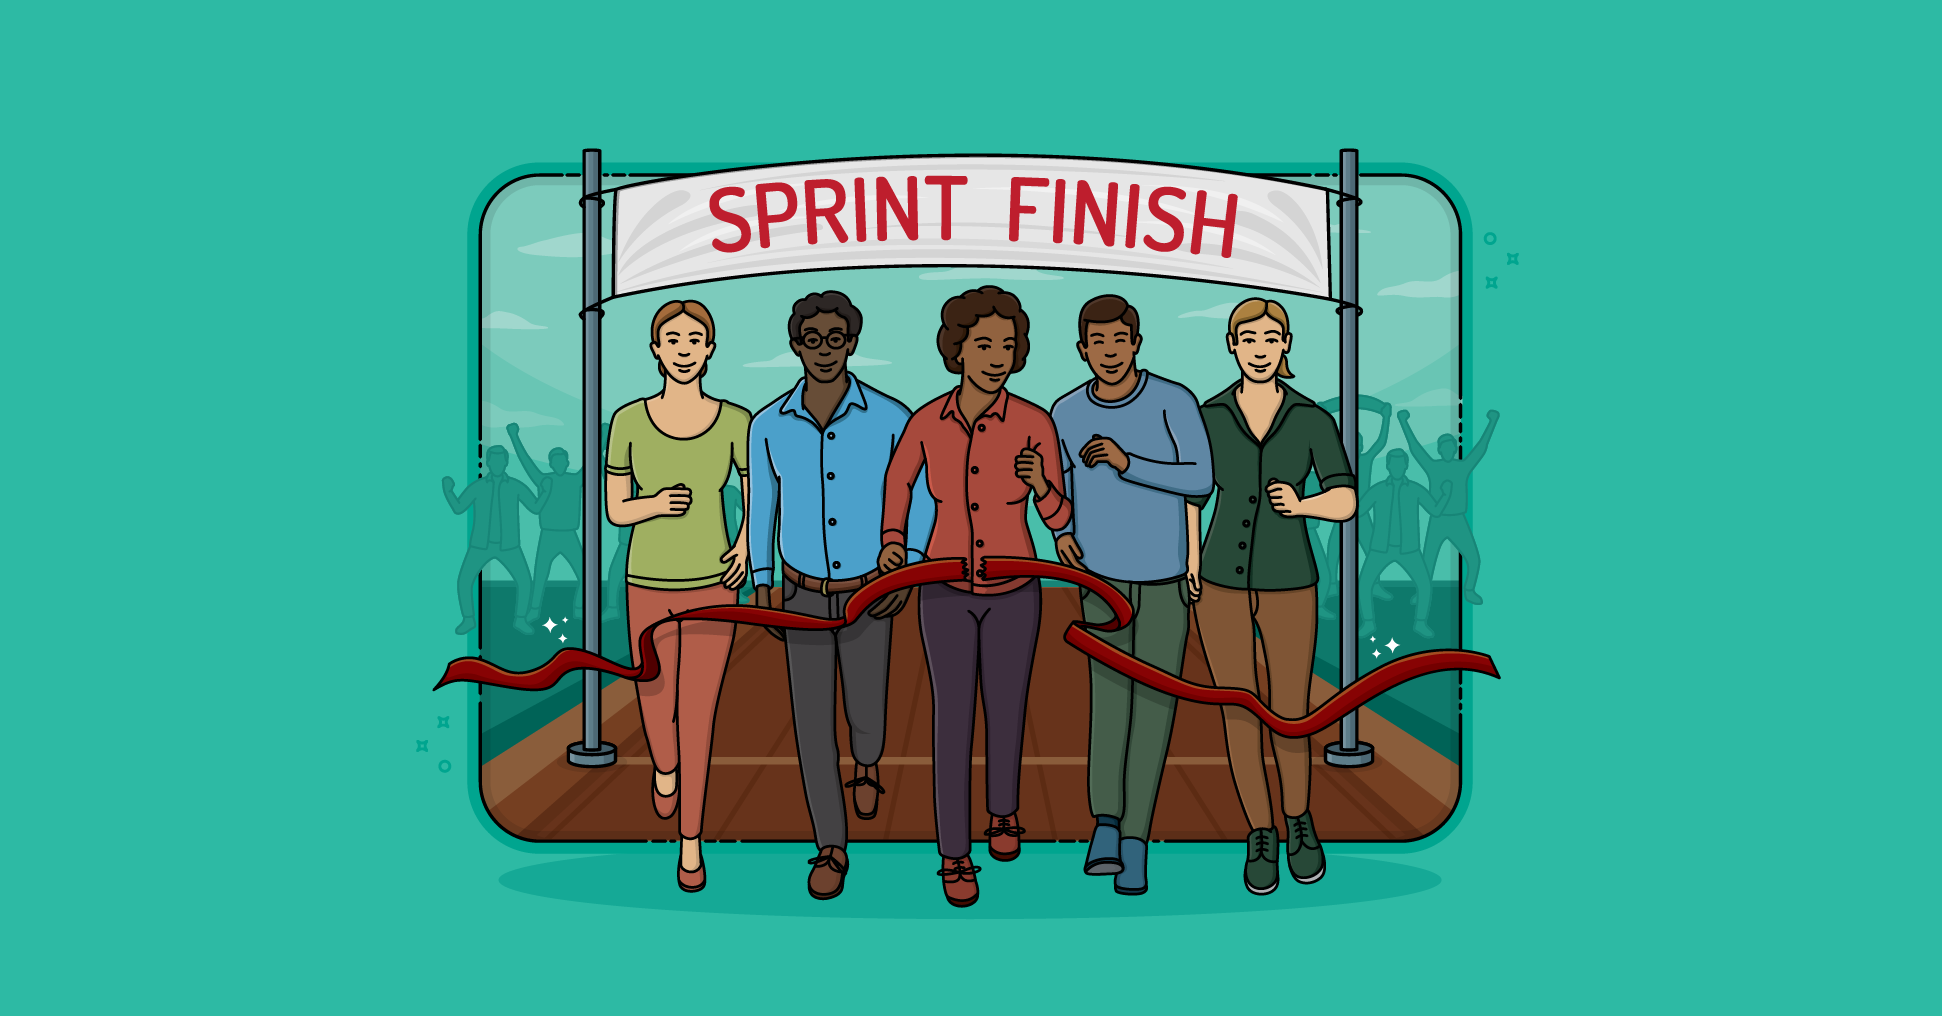 Unfinished Work Every Sprint? 3 Ways to Break the Habit